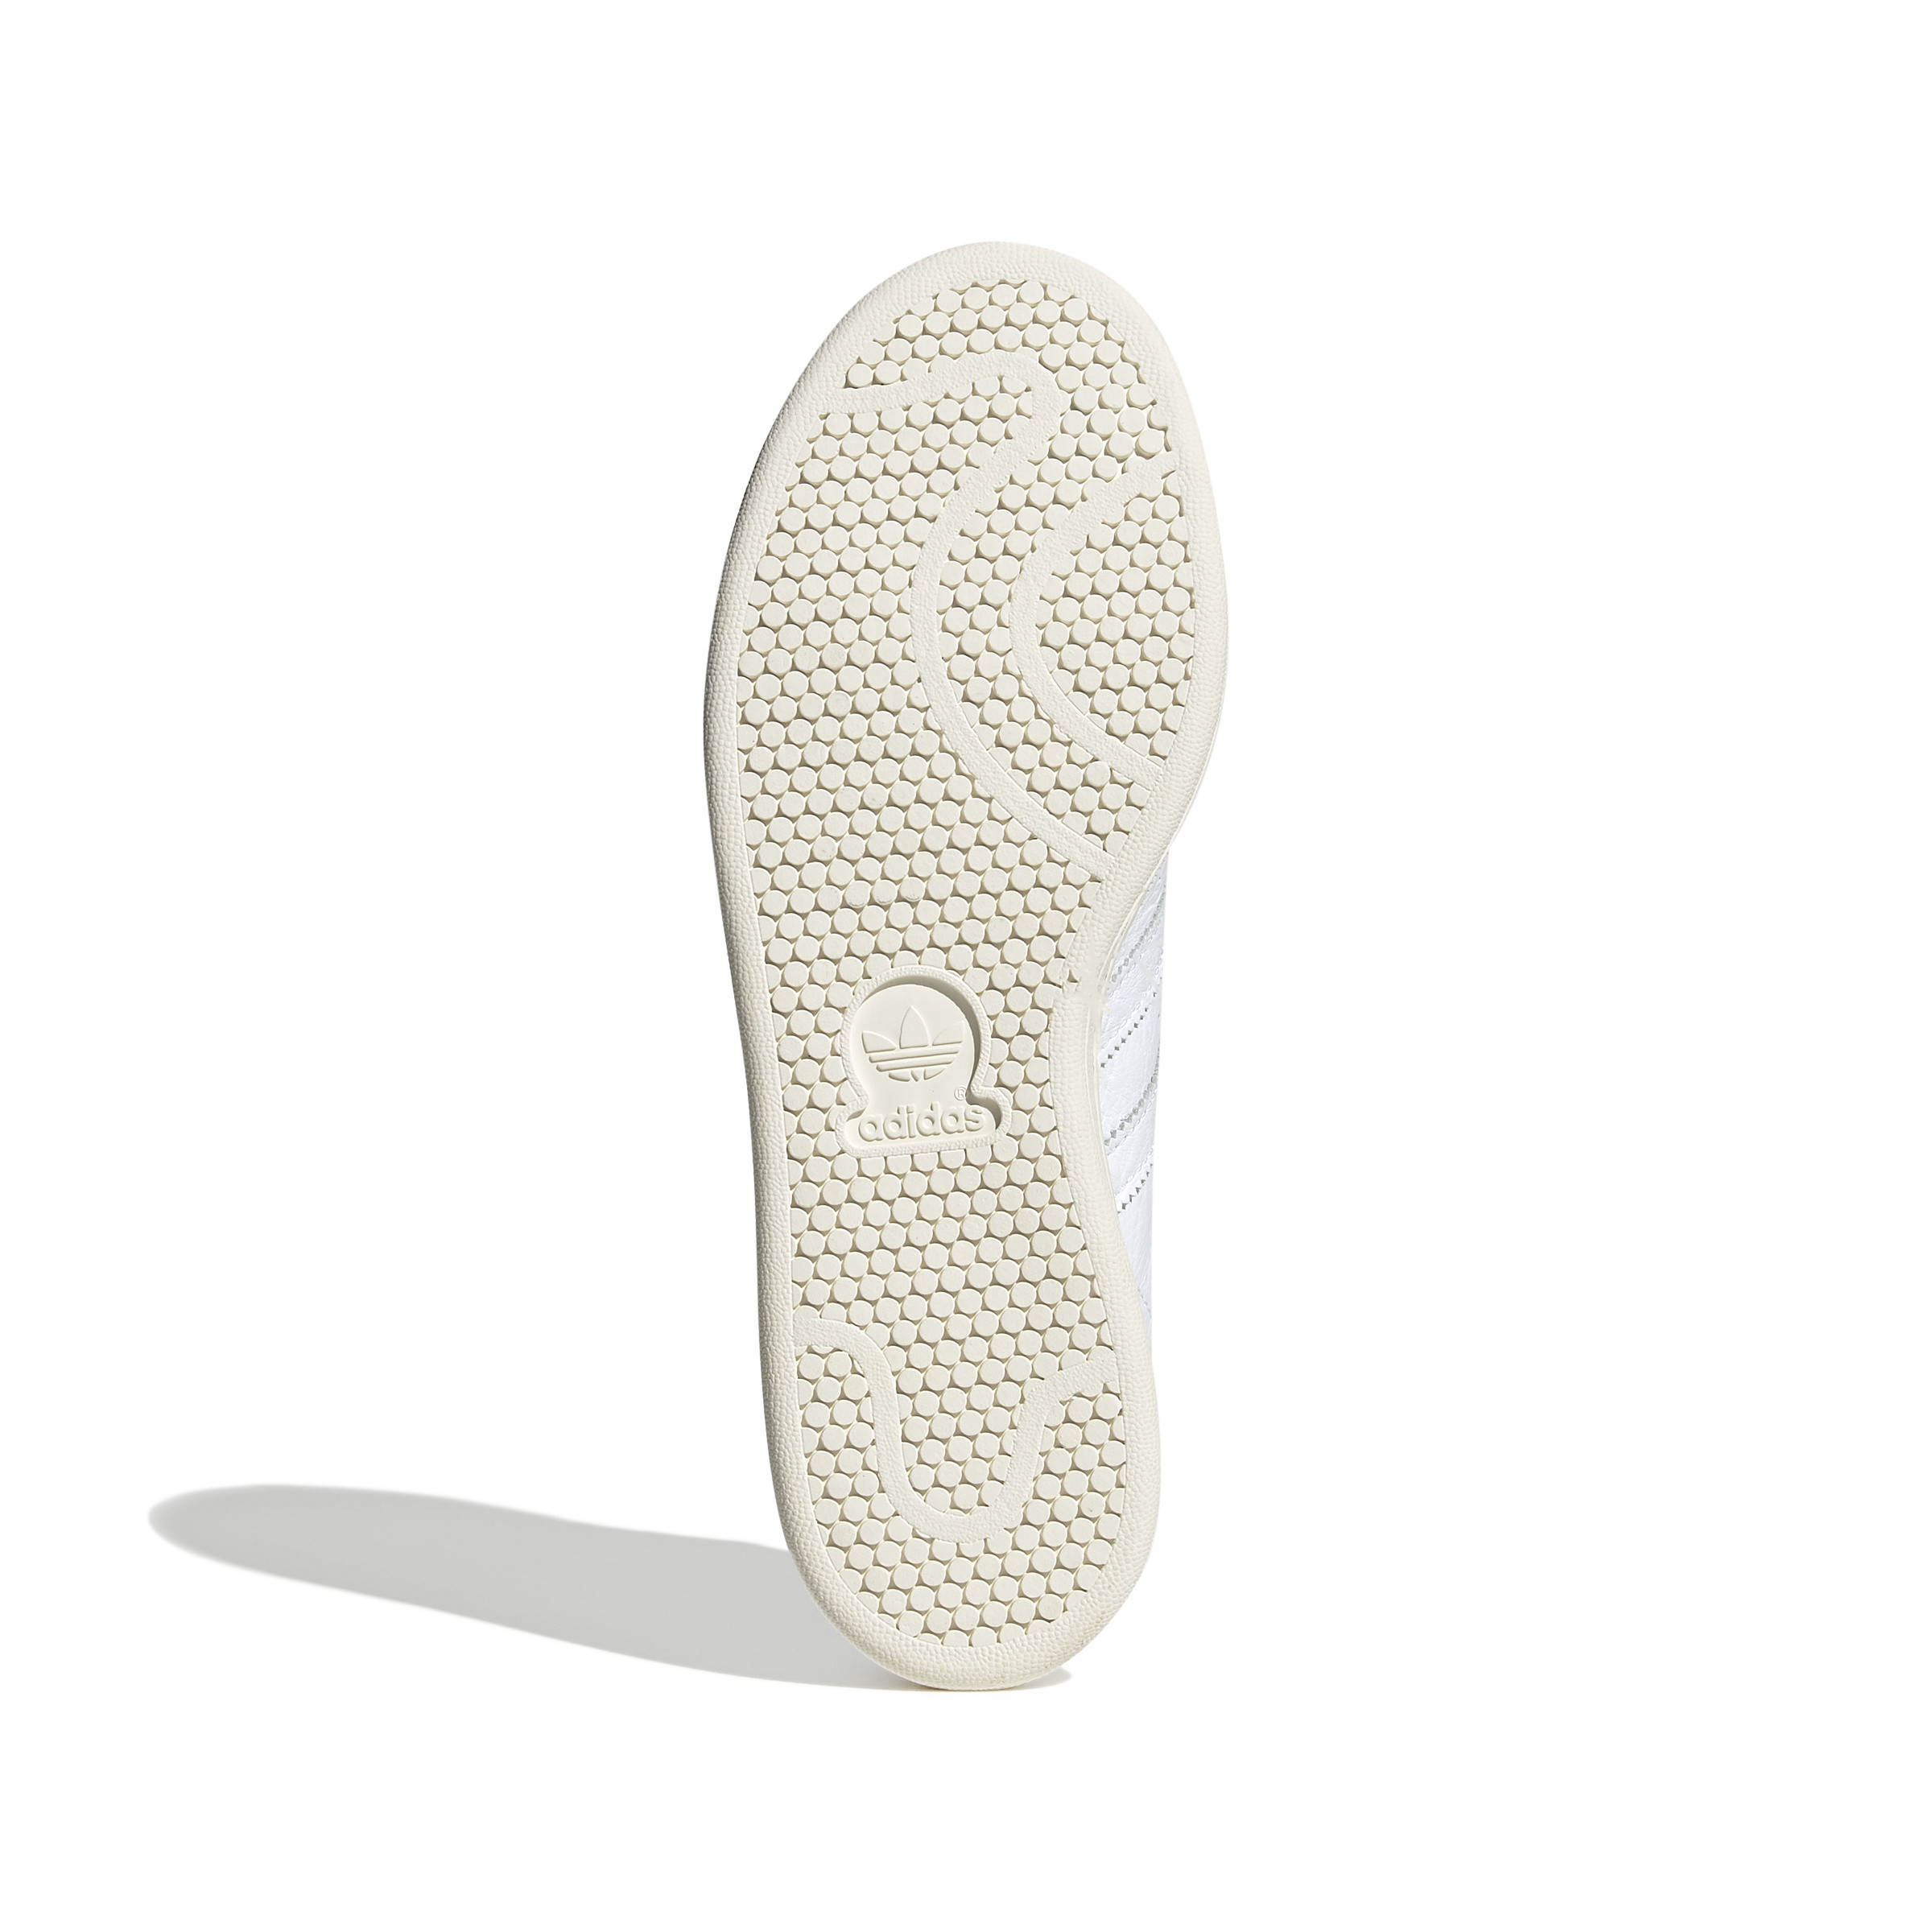 Adidas - Earlham Shoes, White, large image number 2